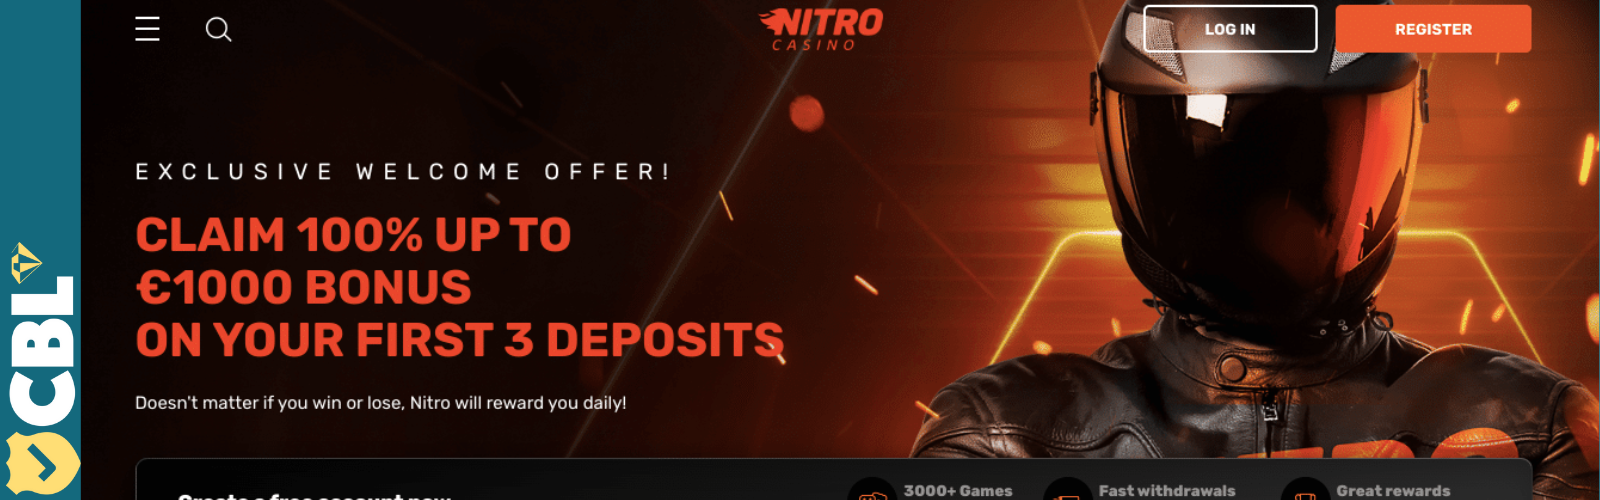 nitro casino review